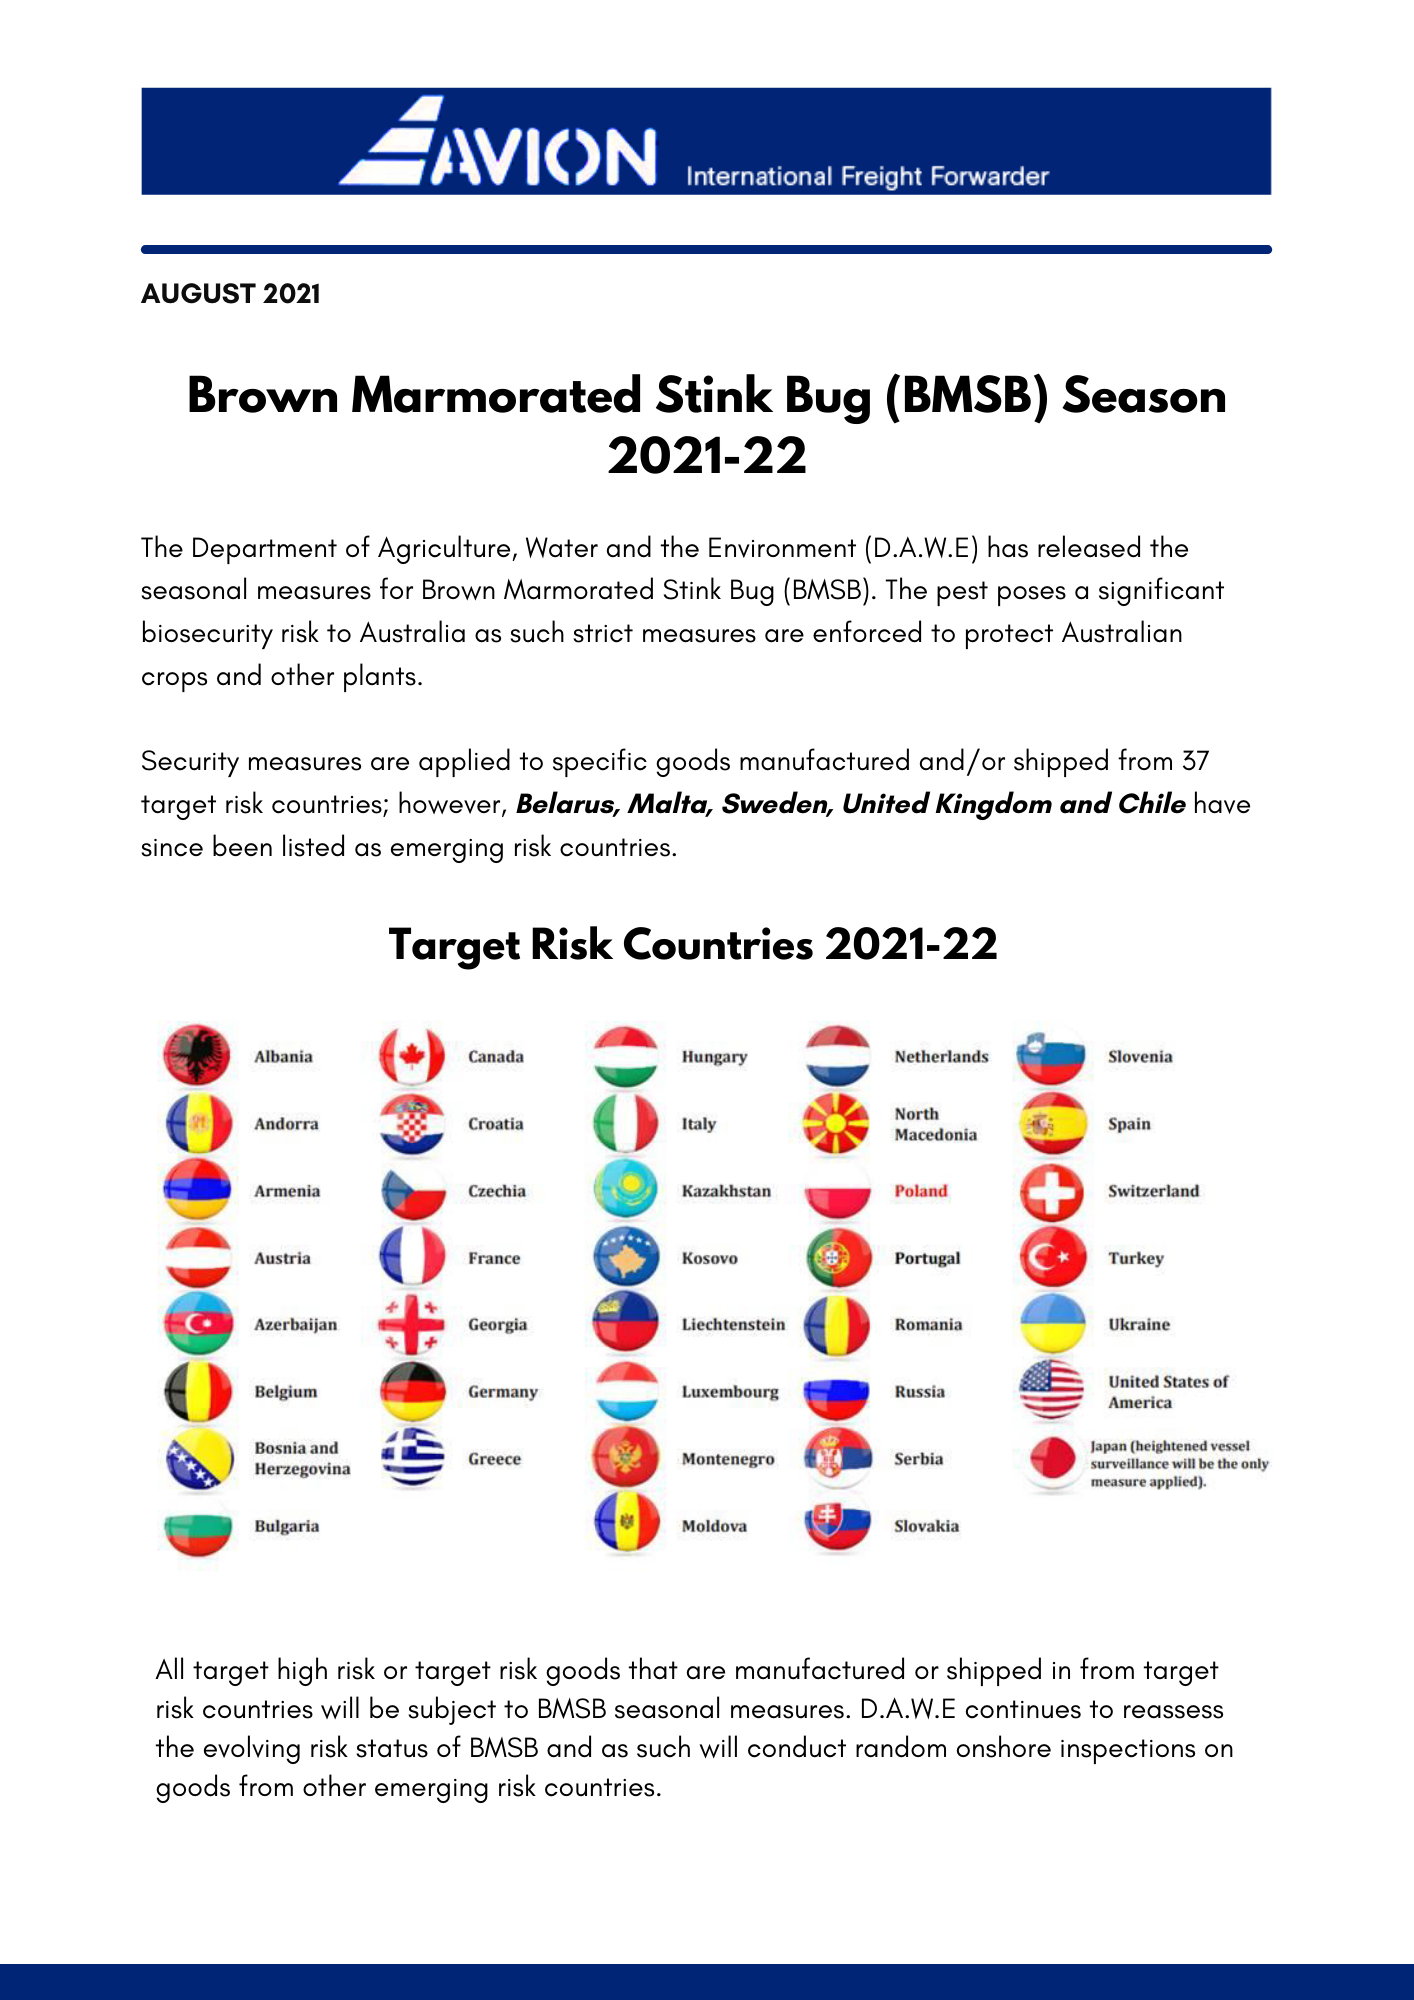 Brown Marmorated Stink Bug (BMSB) Season 2021-22